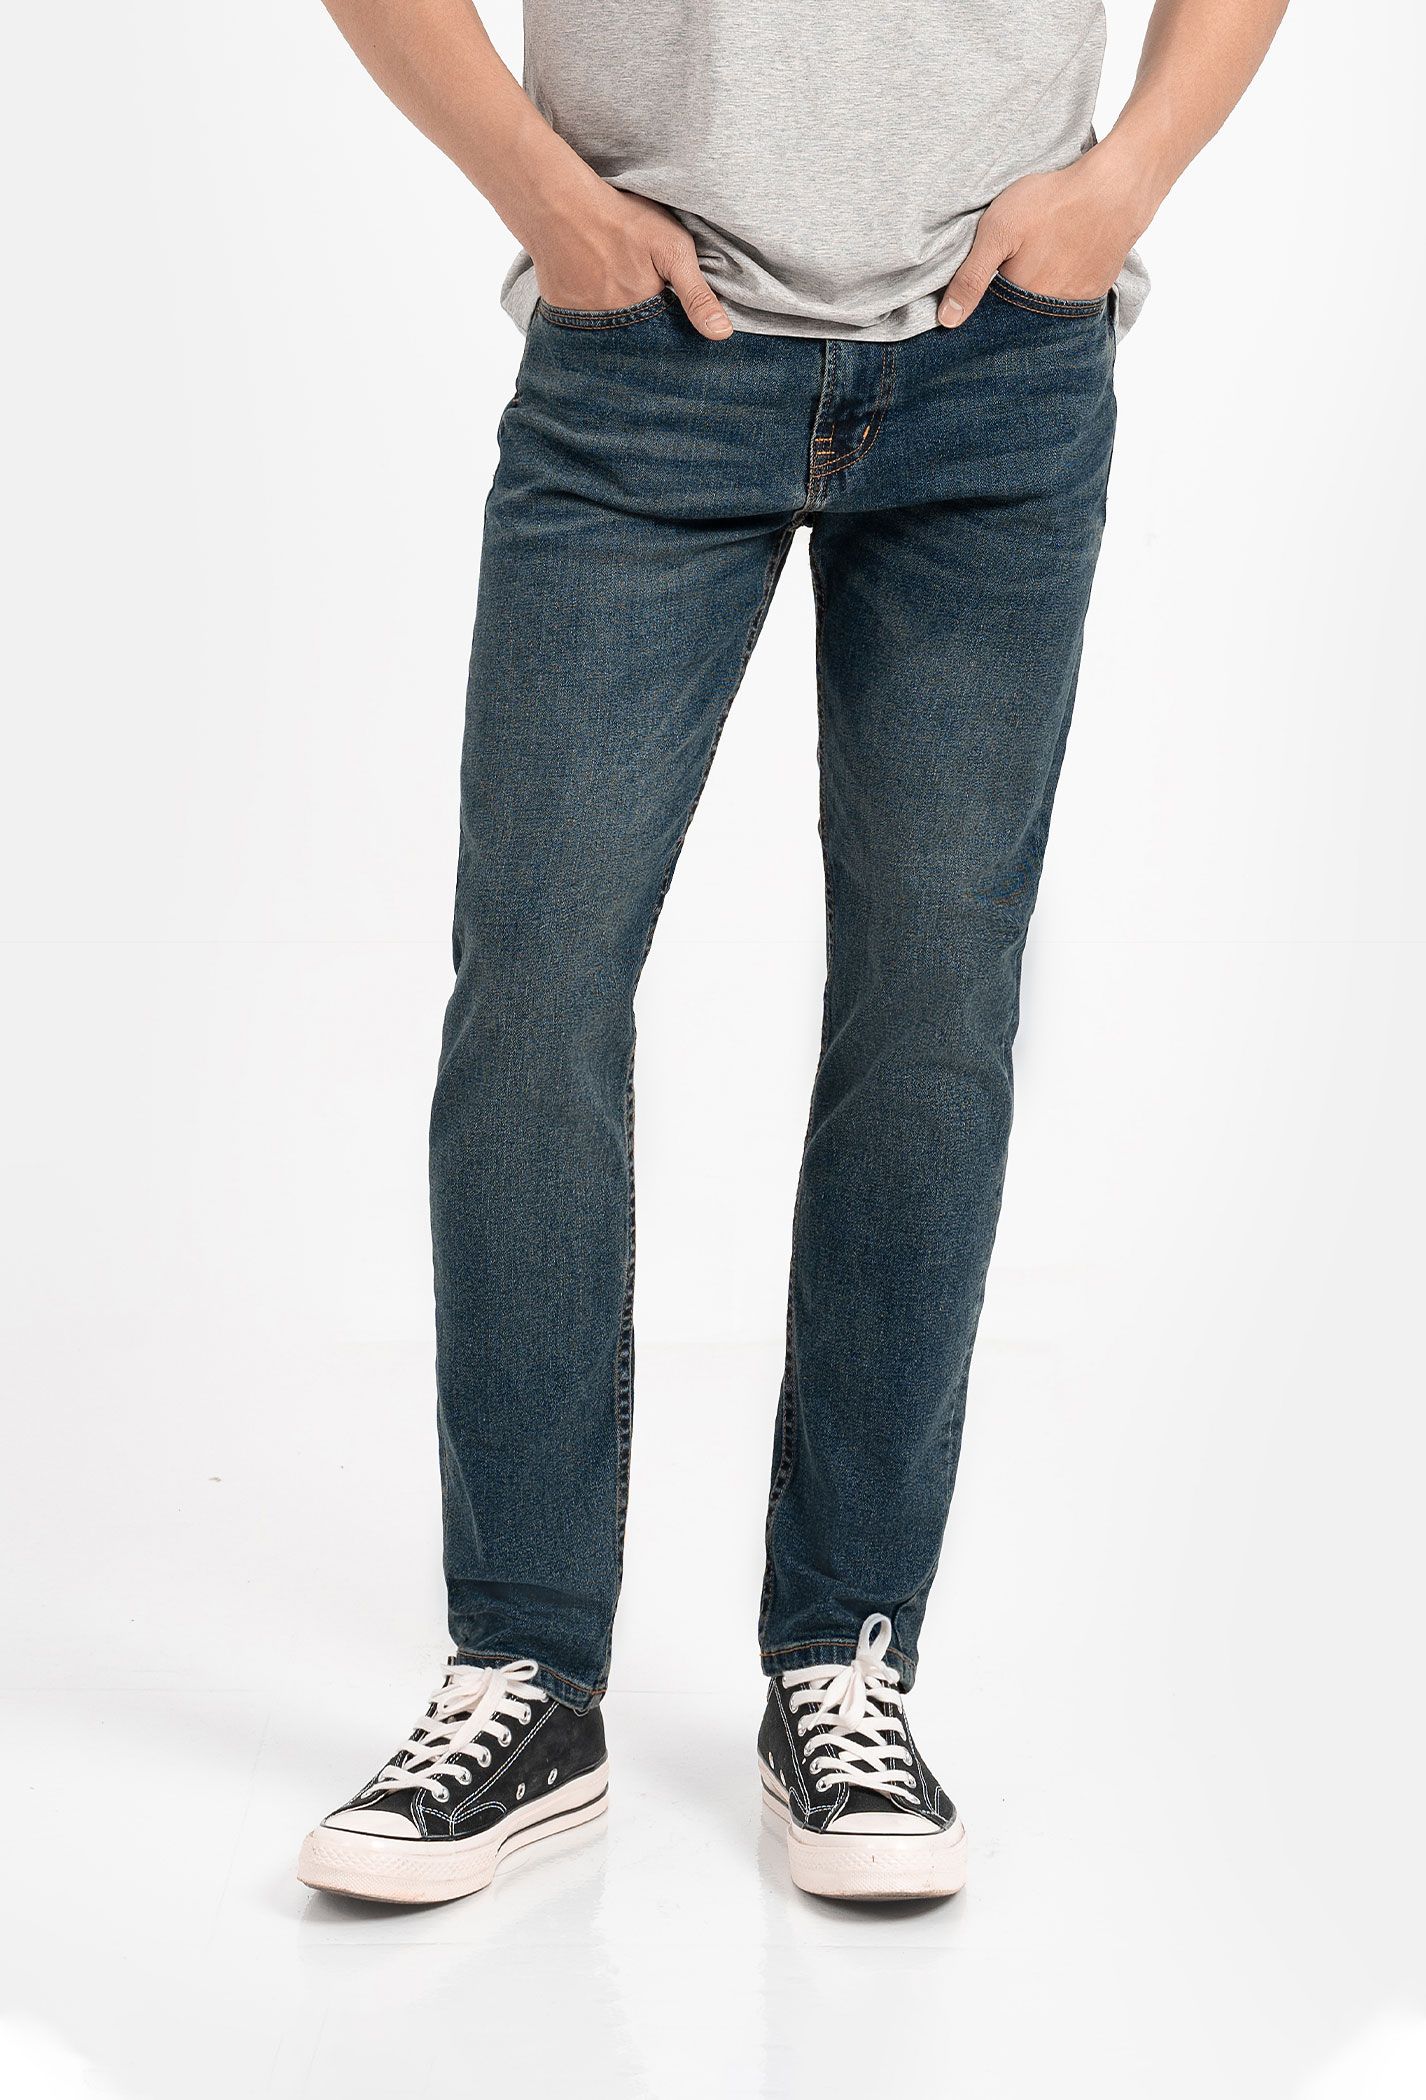 Quần Jeans Basic Slim V2 Xanh �����m